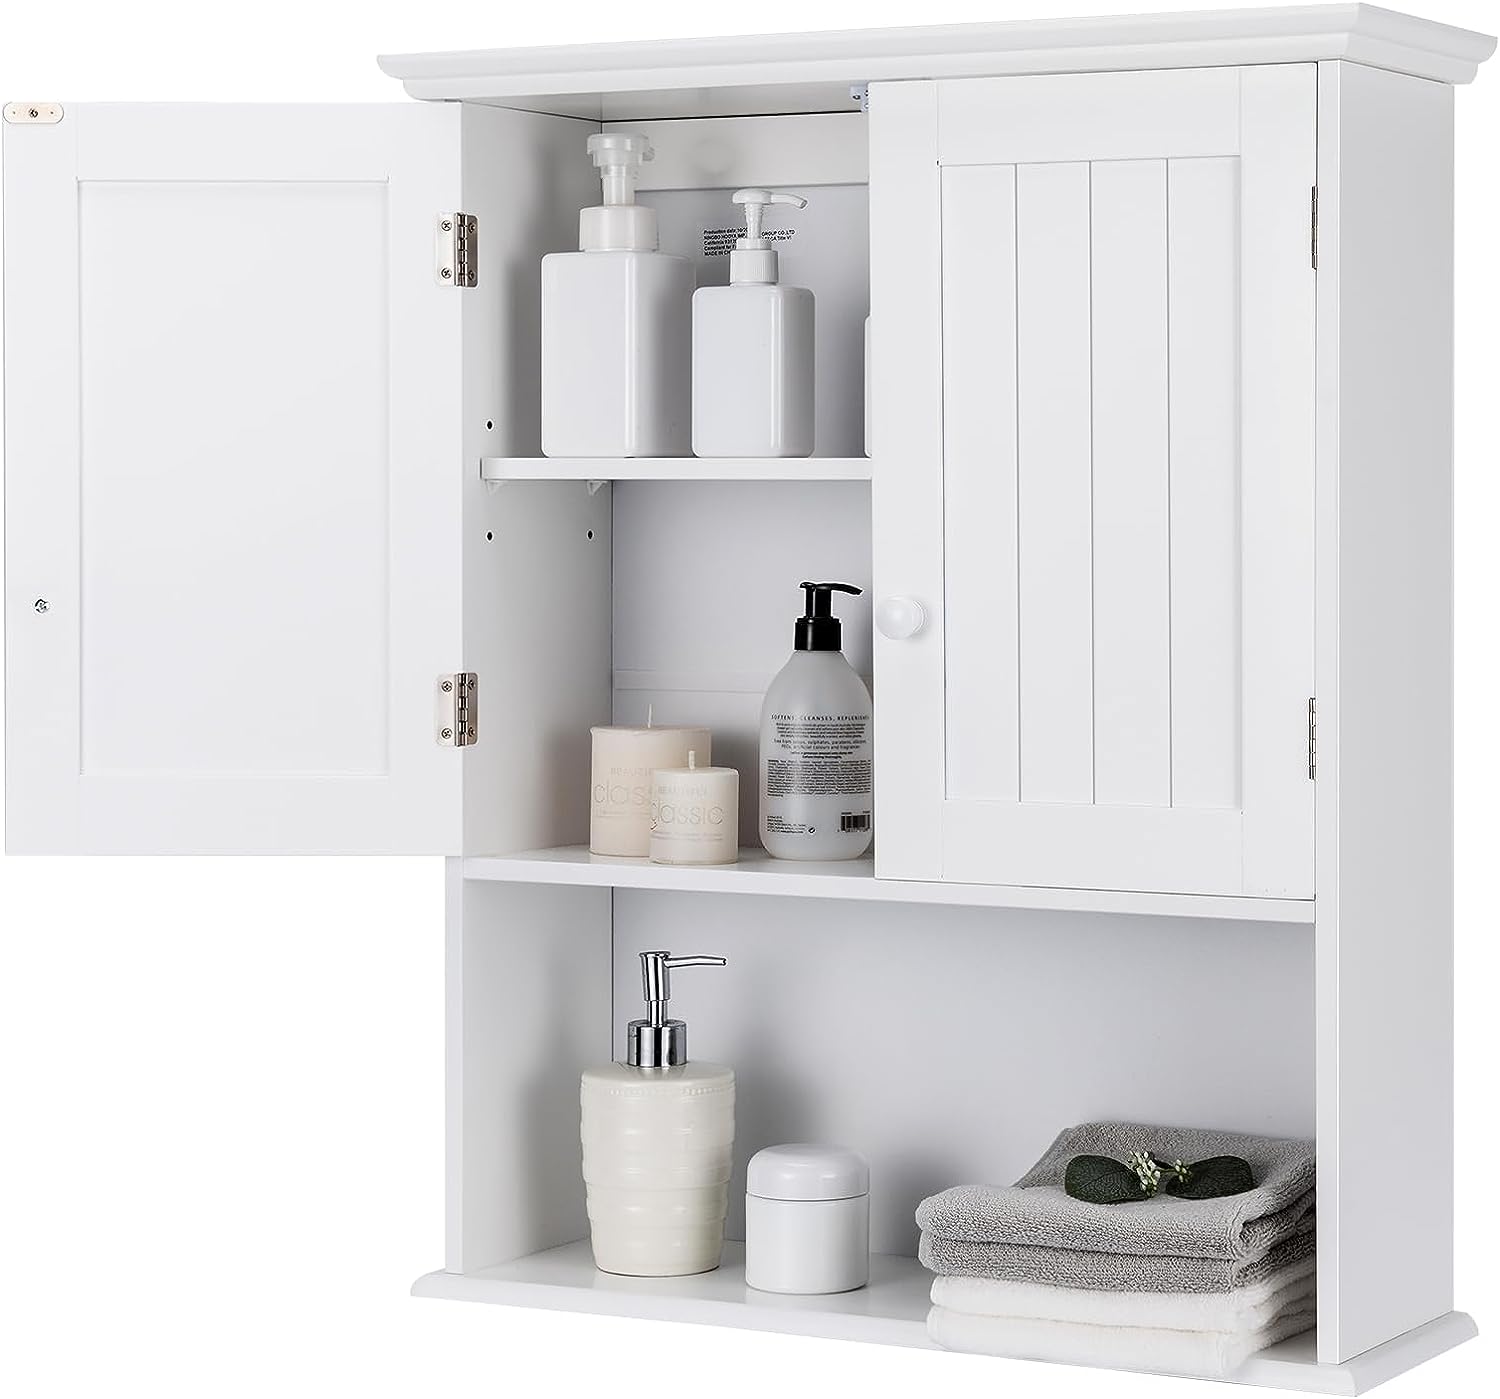 Giantex Bathroom Wall Mounted Cabinet - Storage Cabinet w/Adjustable Shelf